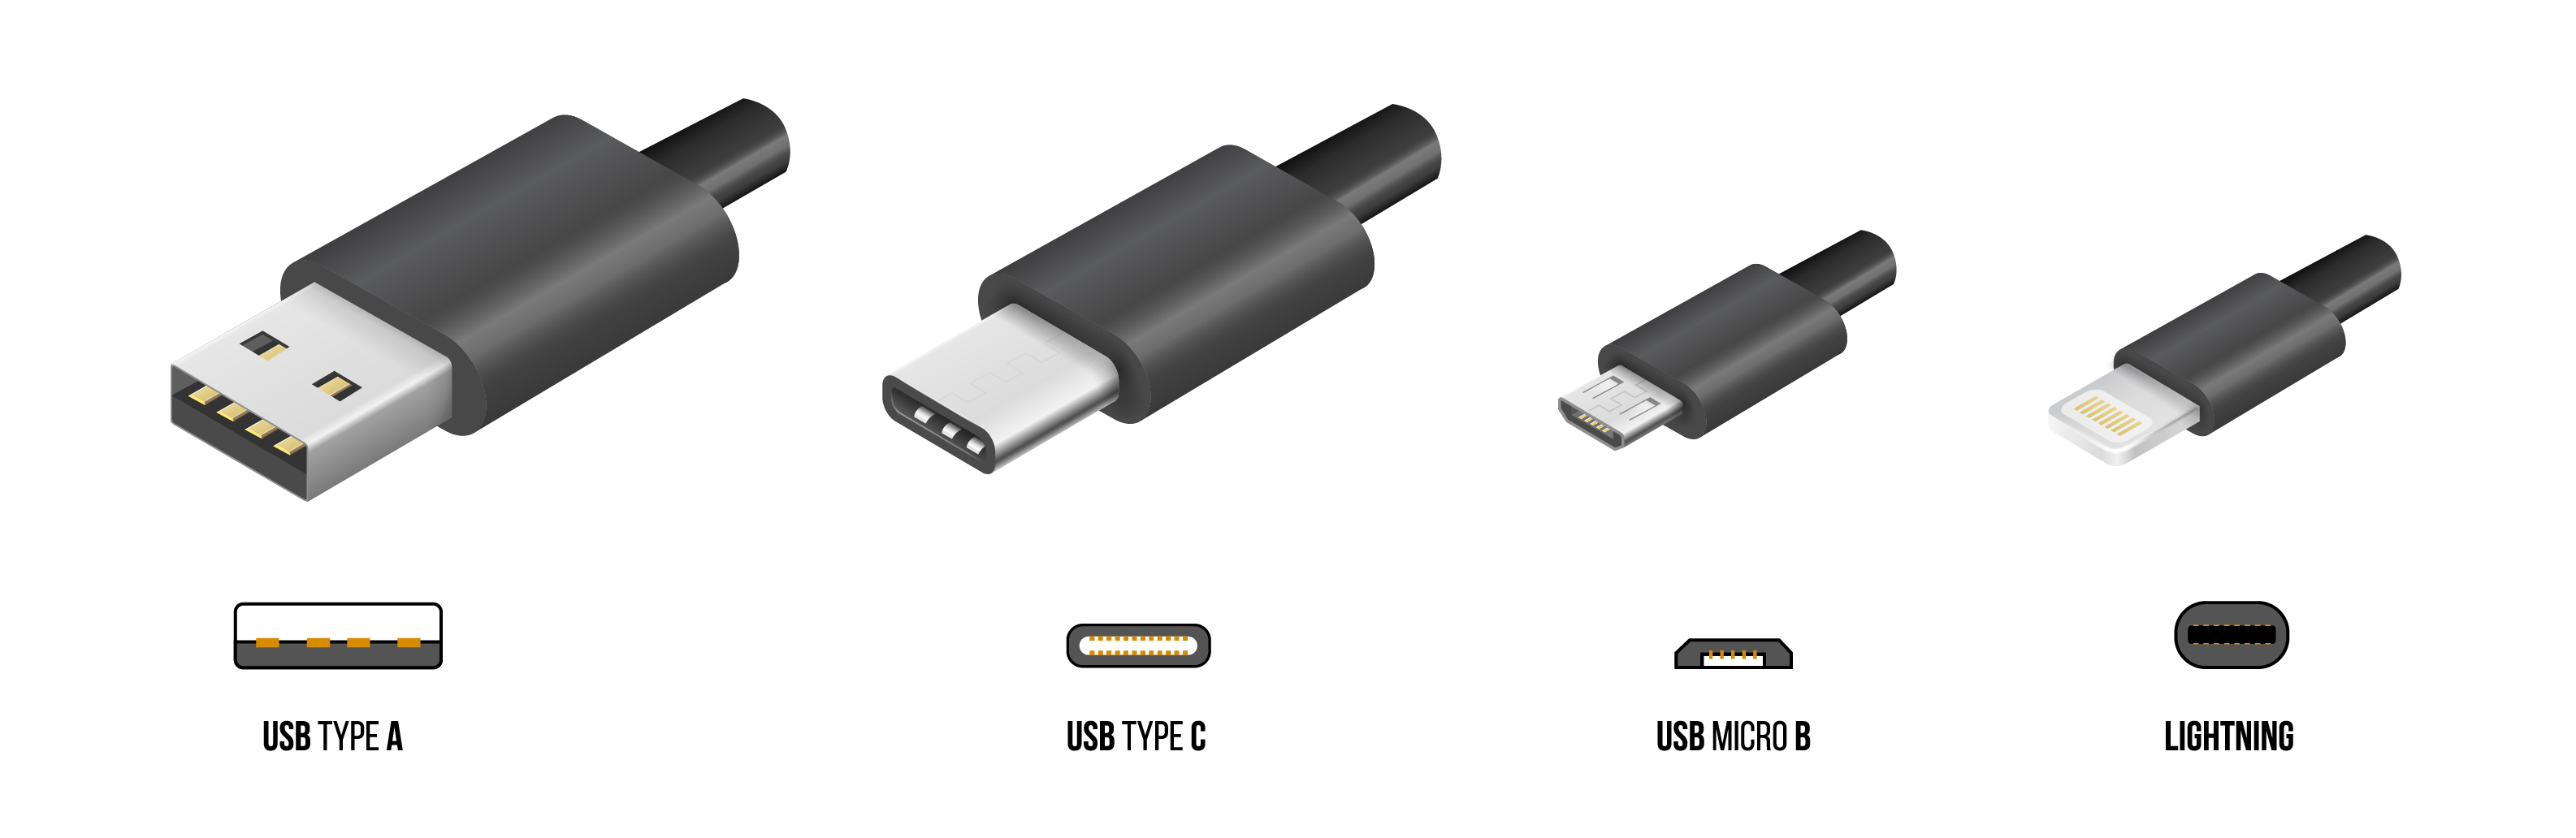 USB-A vs USB-C: Comparing Different USB Types On Monitors 